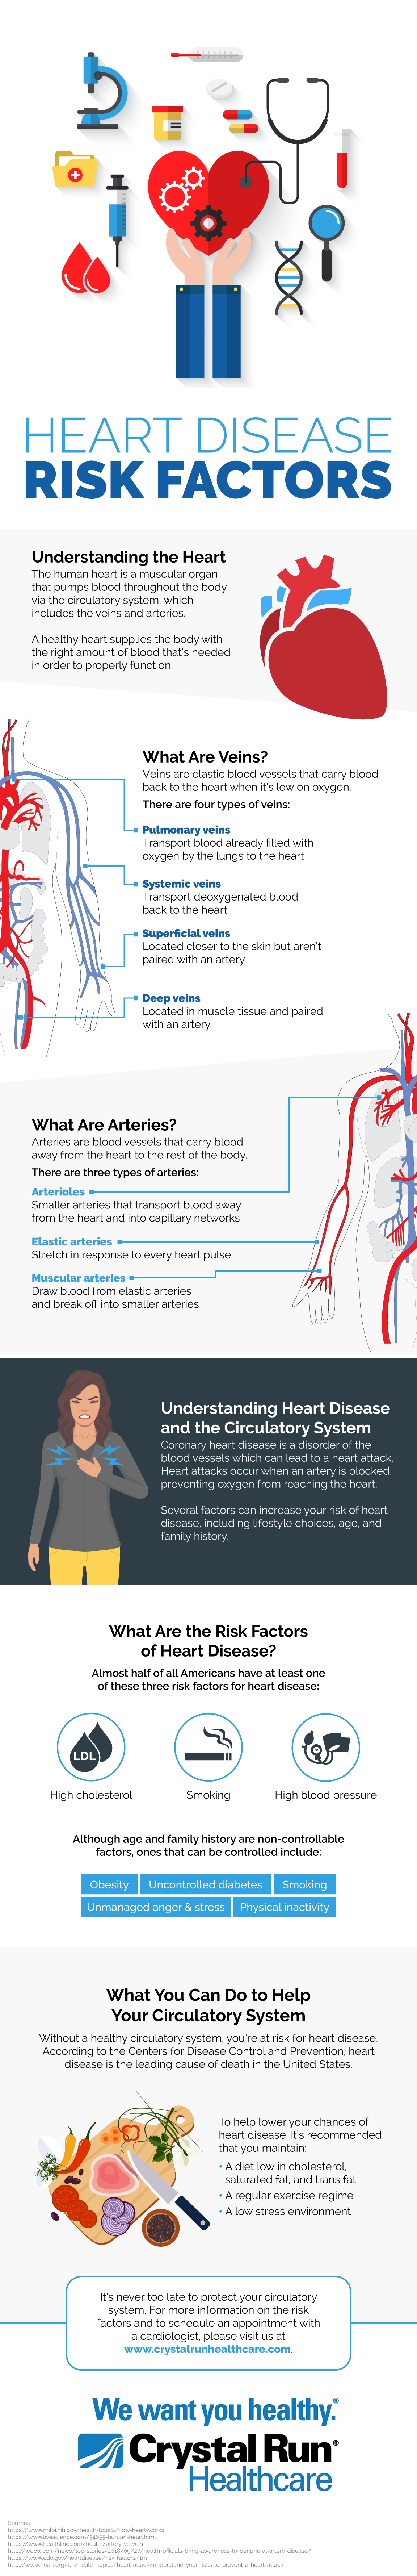 Heart Disease Risk Factors | Crystal Run Healthcare